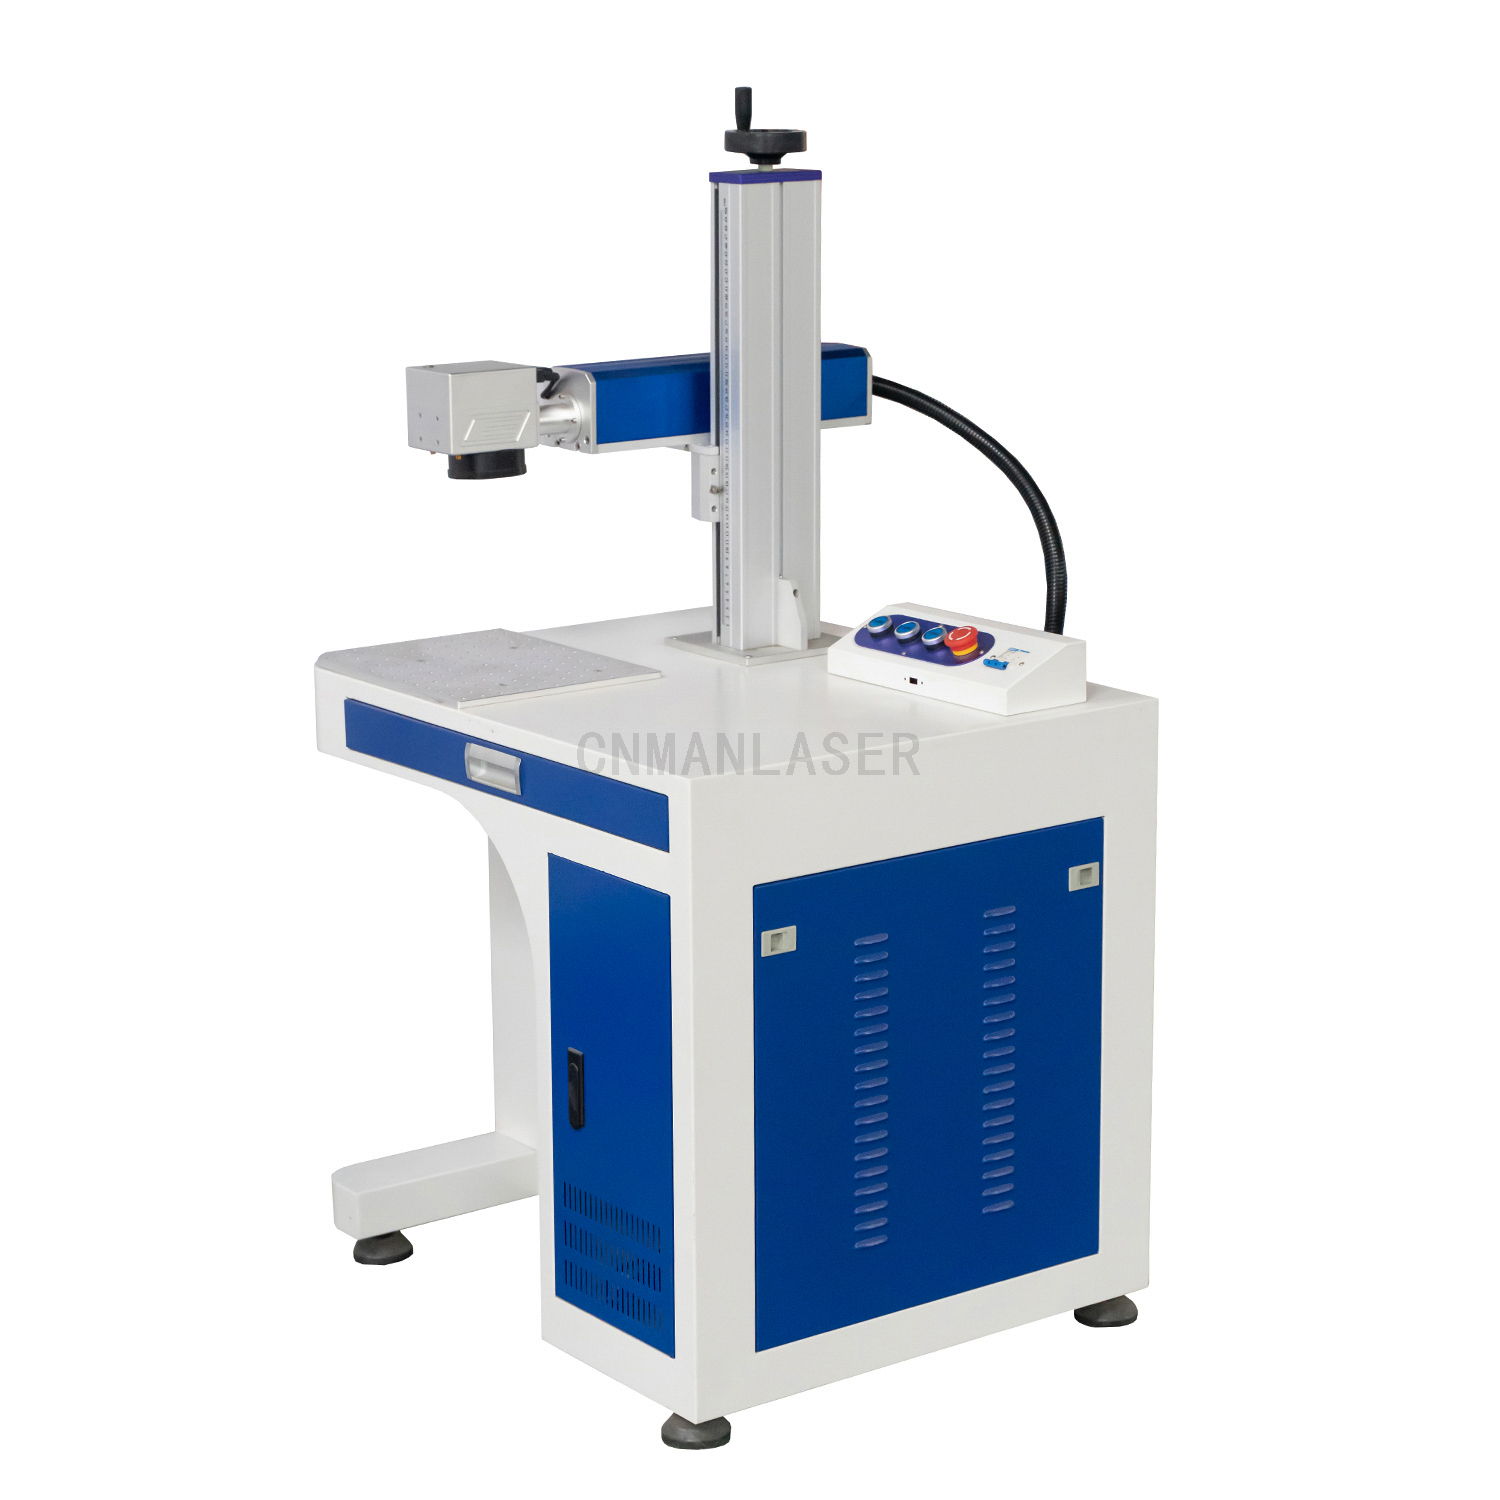 30W 50W 100W Split Fiber Laser Marking/Engraving/Engraver/Cutter/Printing/Marker Machine for Gobos/Projection/LED Logo